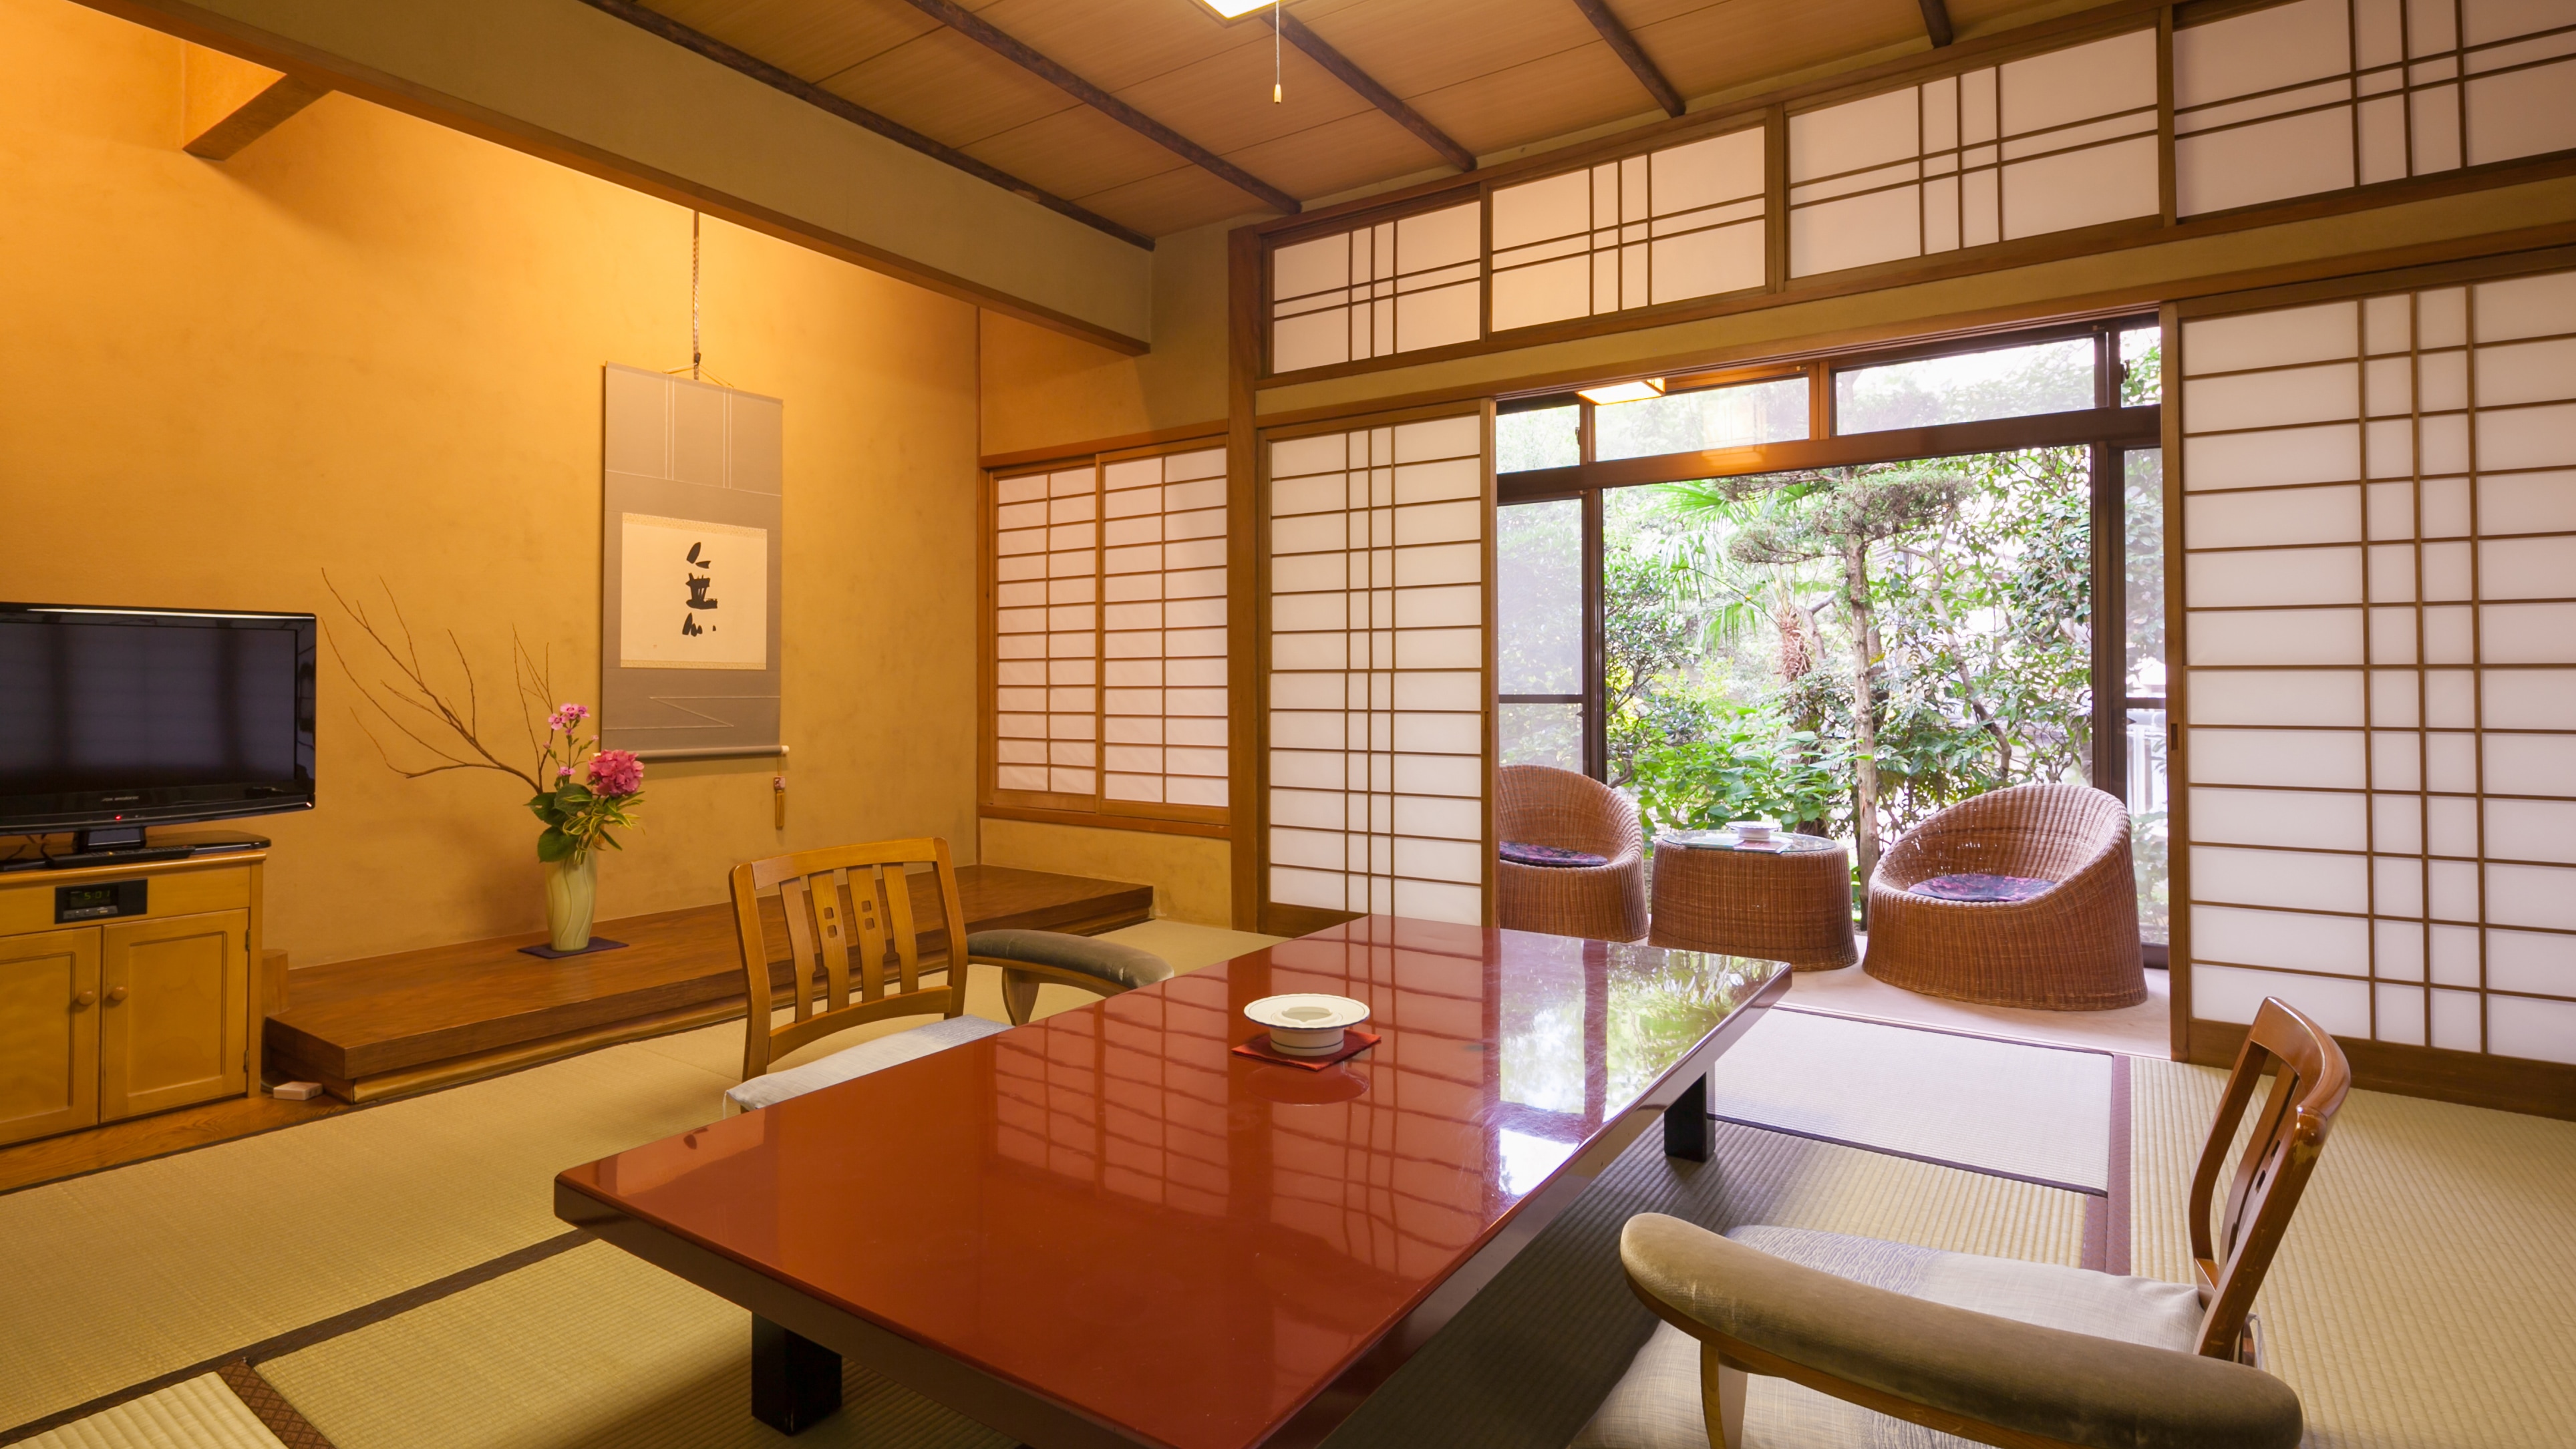 Gekkoen Sanso Standard Japanese-style room ◆ 8 tatami mats + wide rim: Capacity 2-4 people * Check-out: 10:00